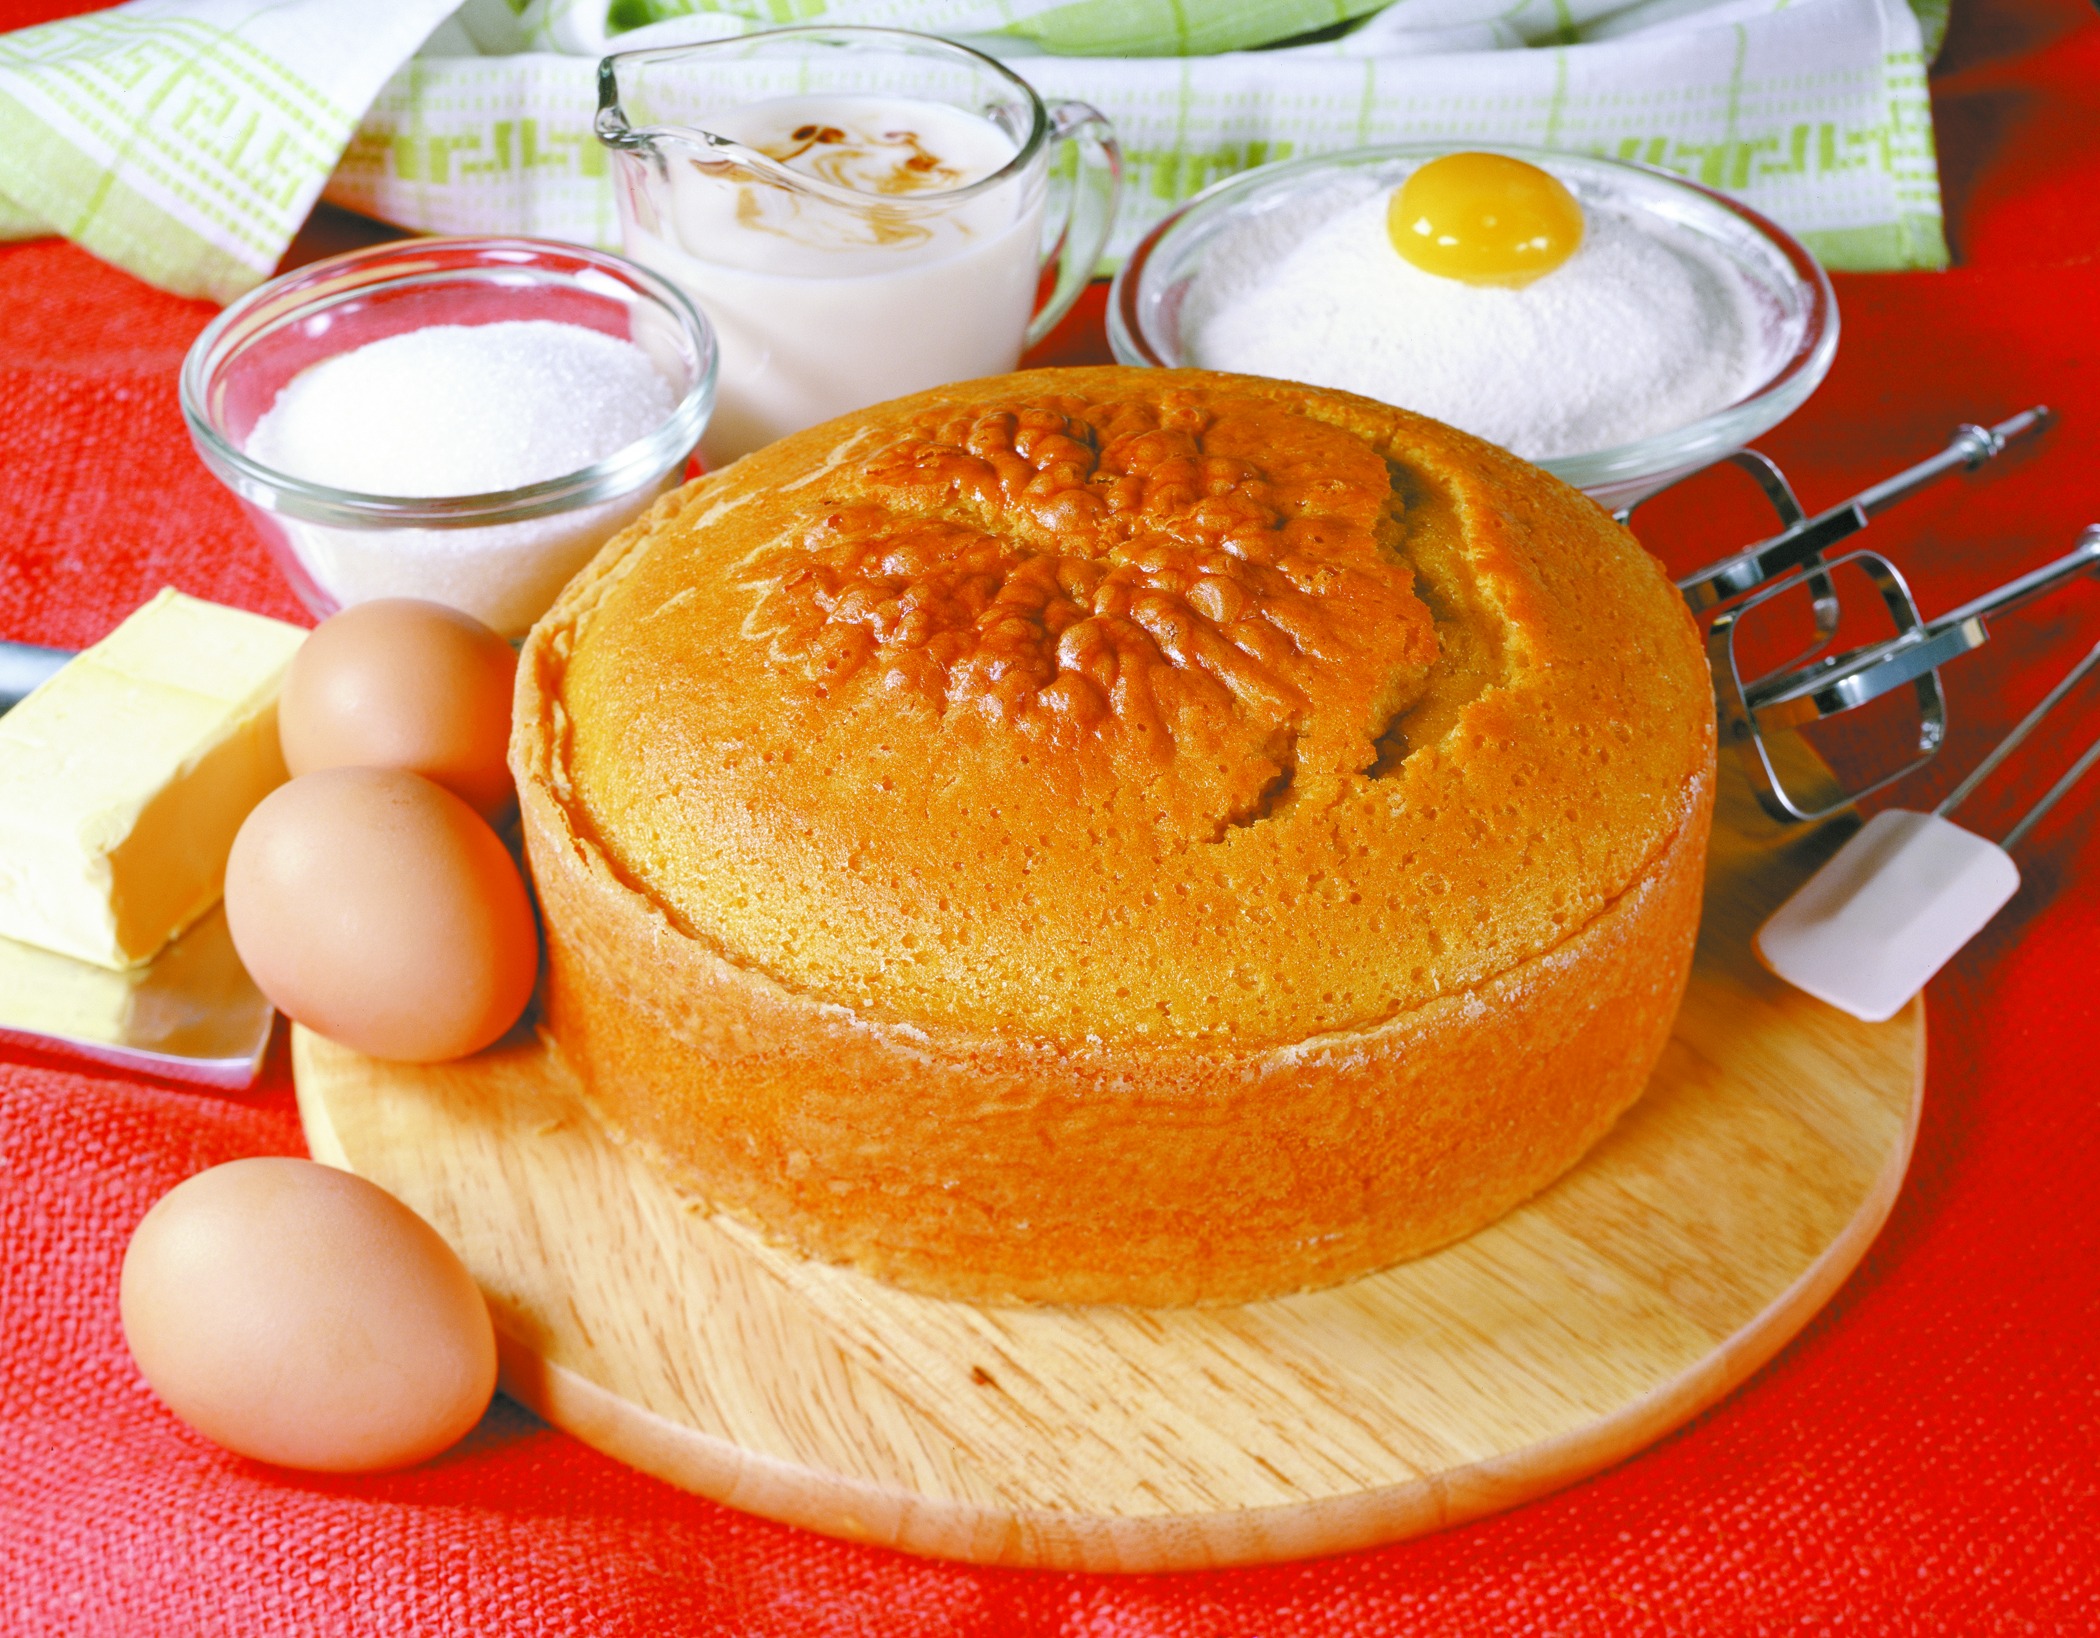 Sponge Cake Recipe in Hindi with video - स्पंज केक रेसिपी